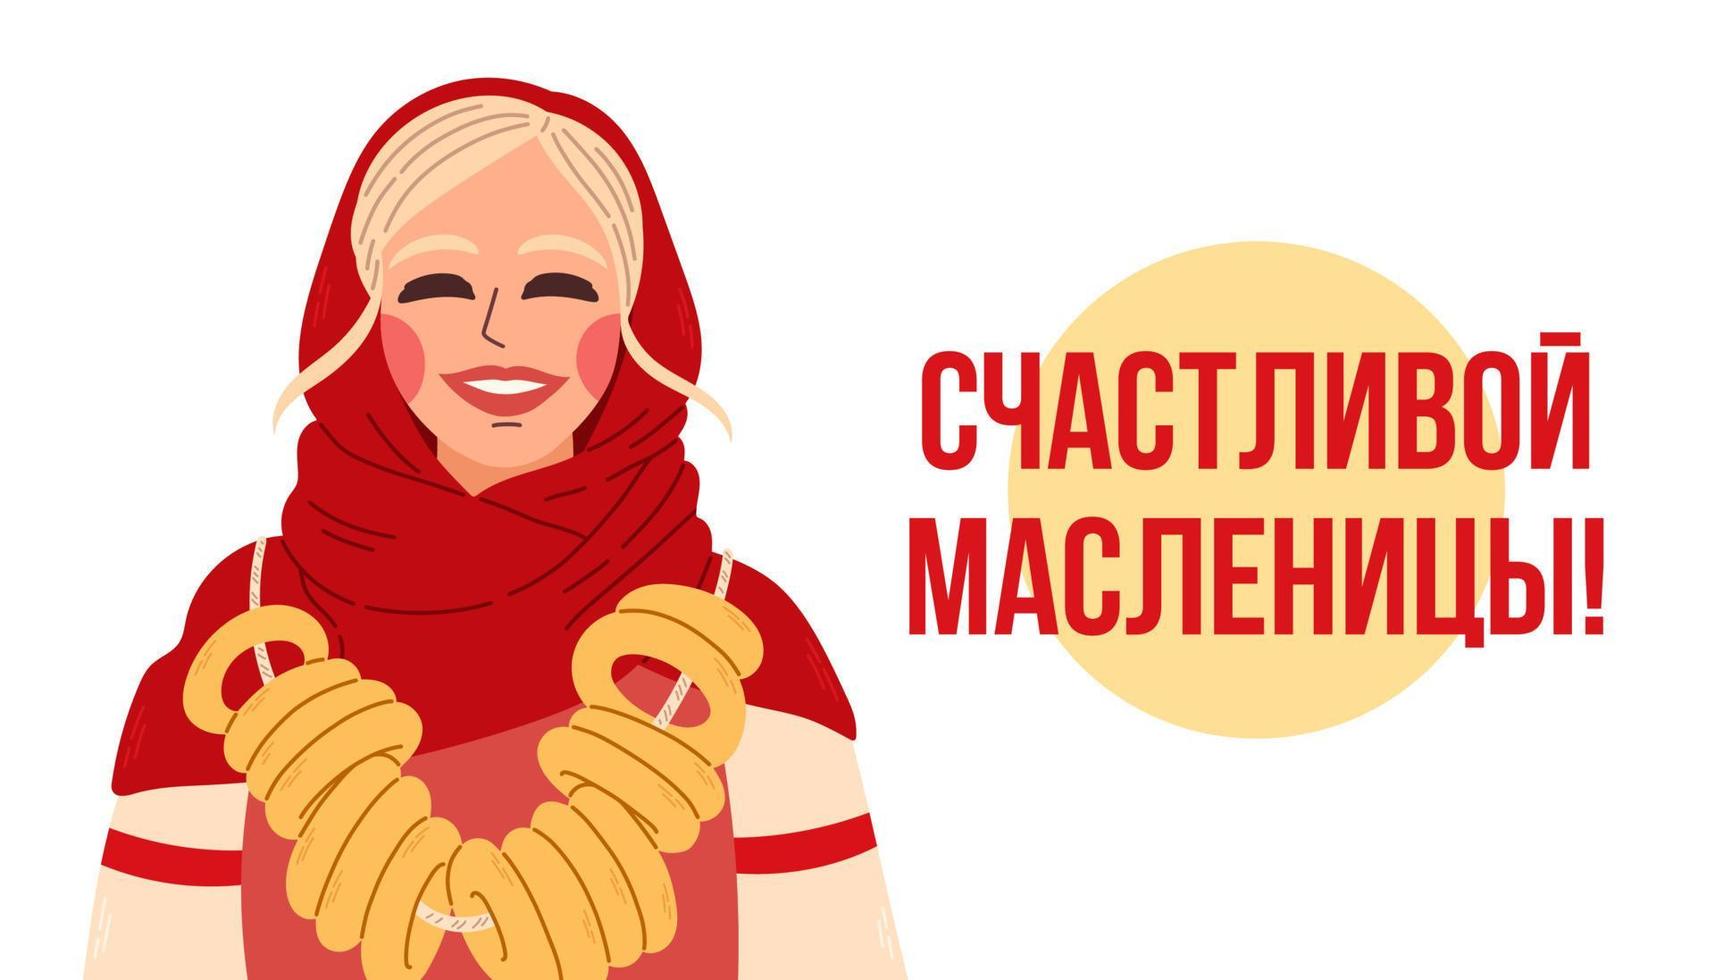 feliz maslenitsa. concepto de vector de carnaval de vacaciones ruso. traducción al ruso feliz carnaval o maslenitsa.